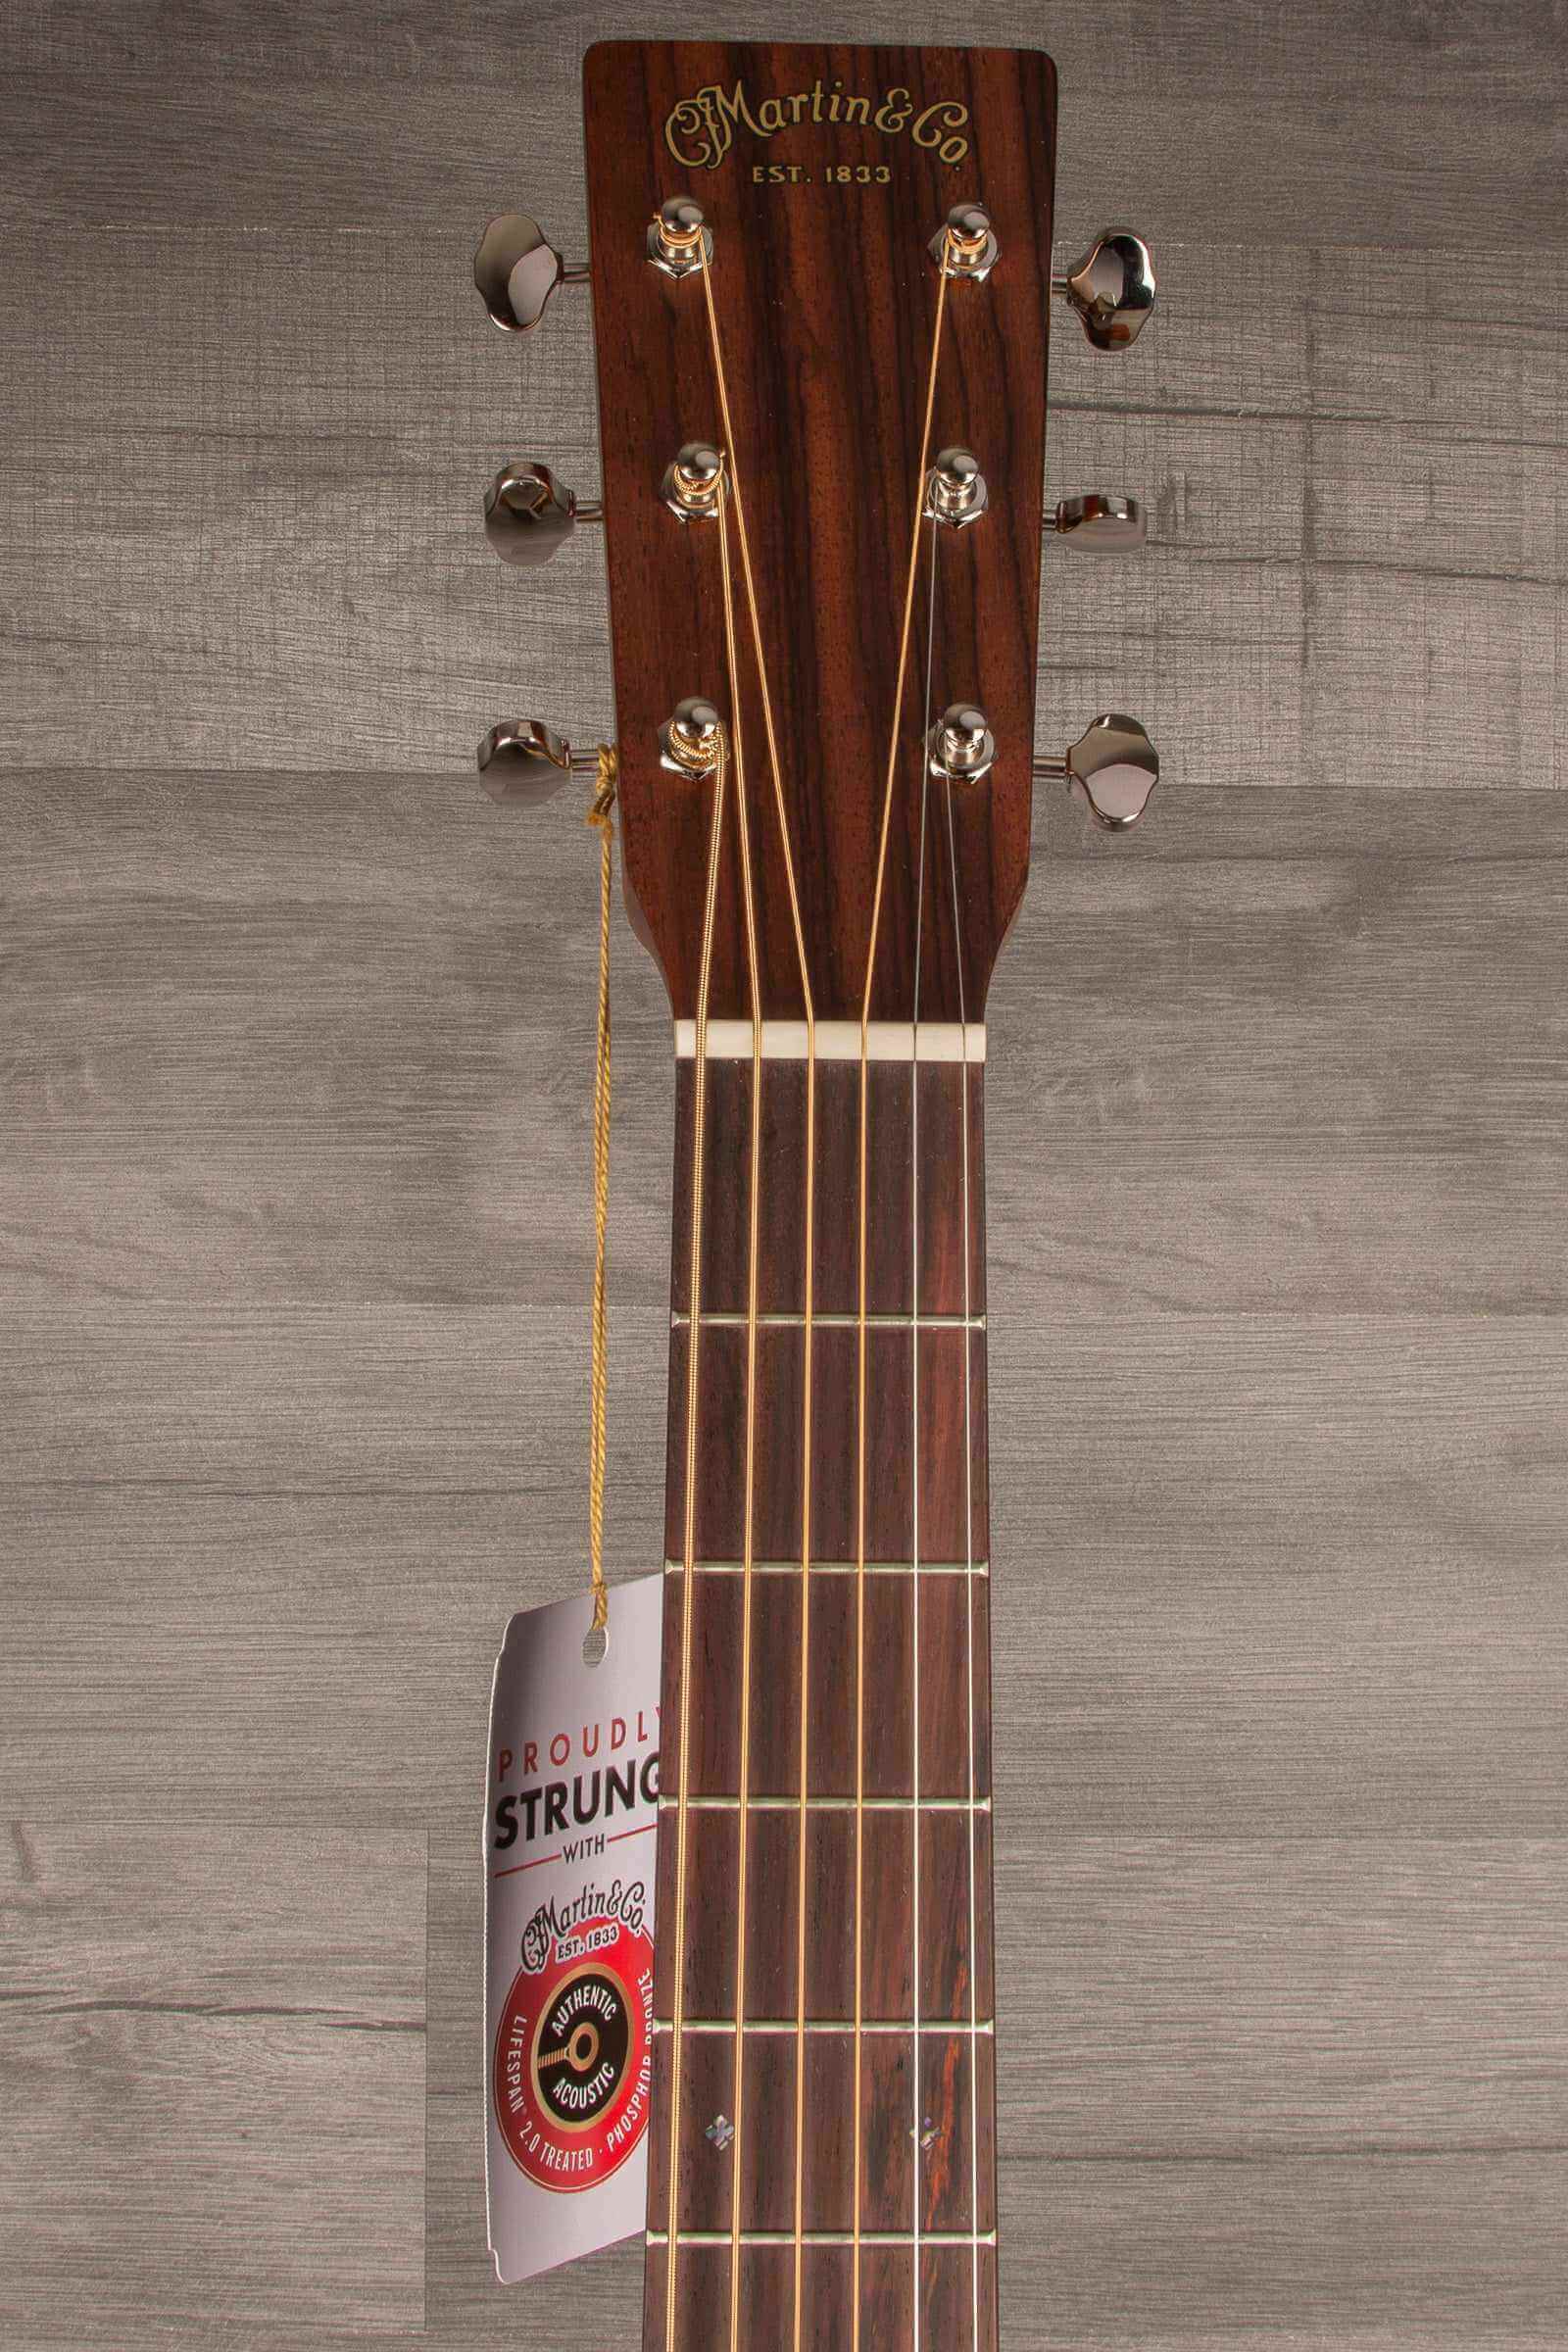 Martin 000-15M Acoustic guitar - Musicstreet